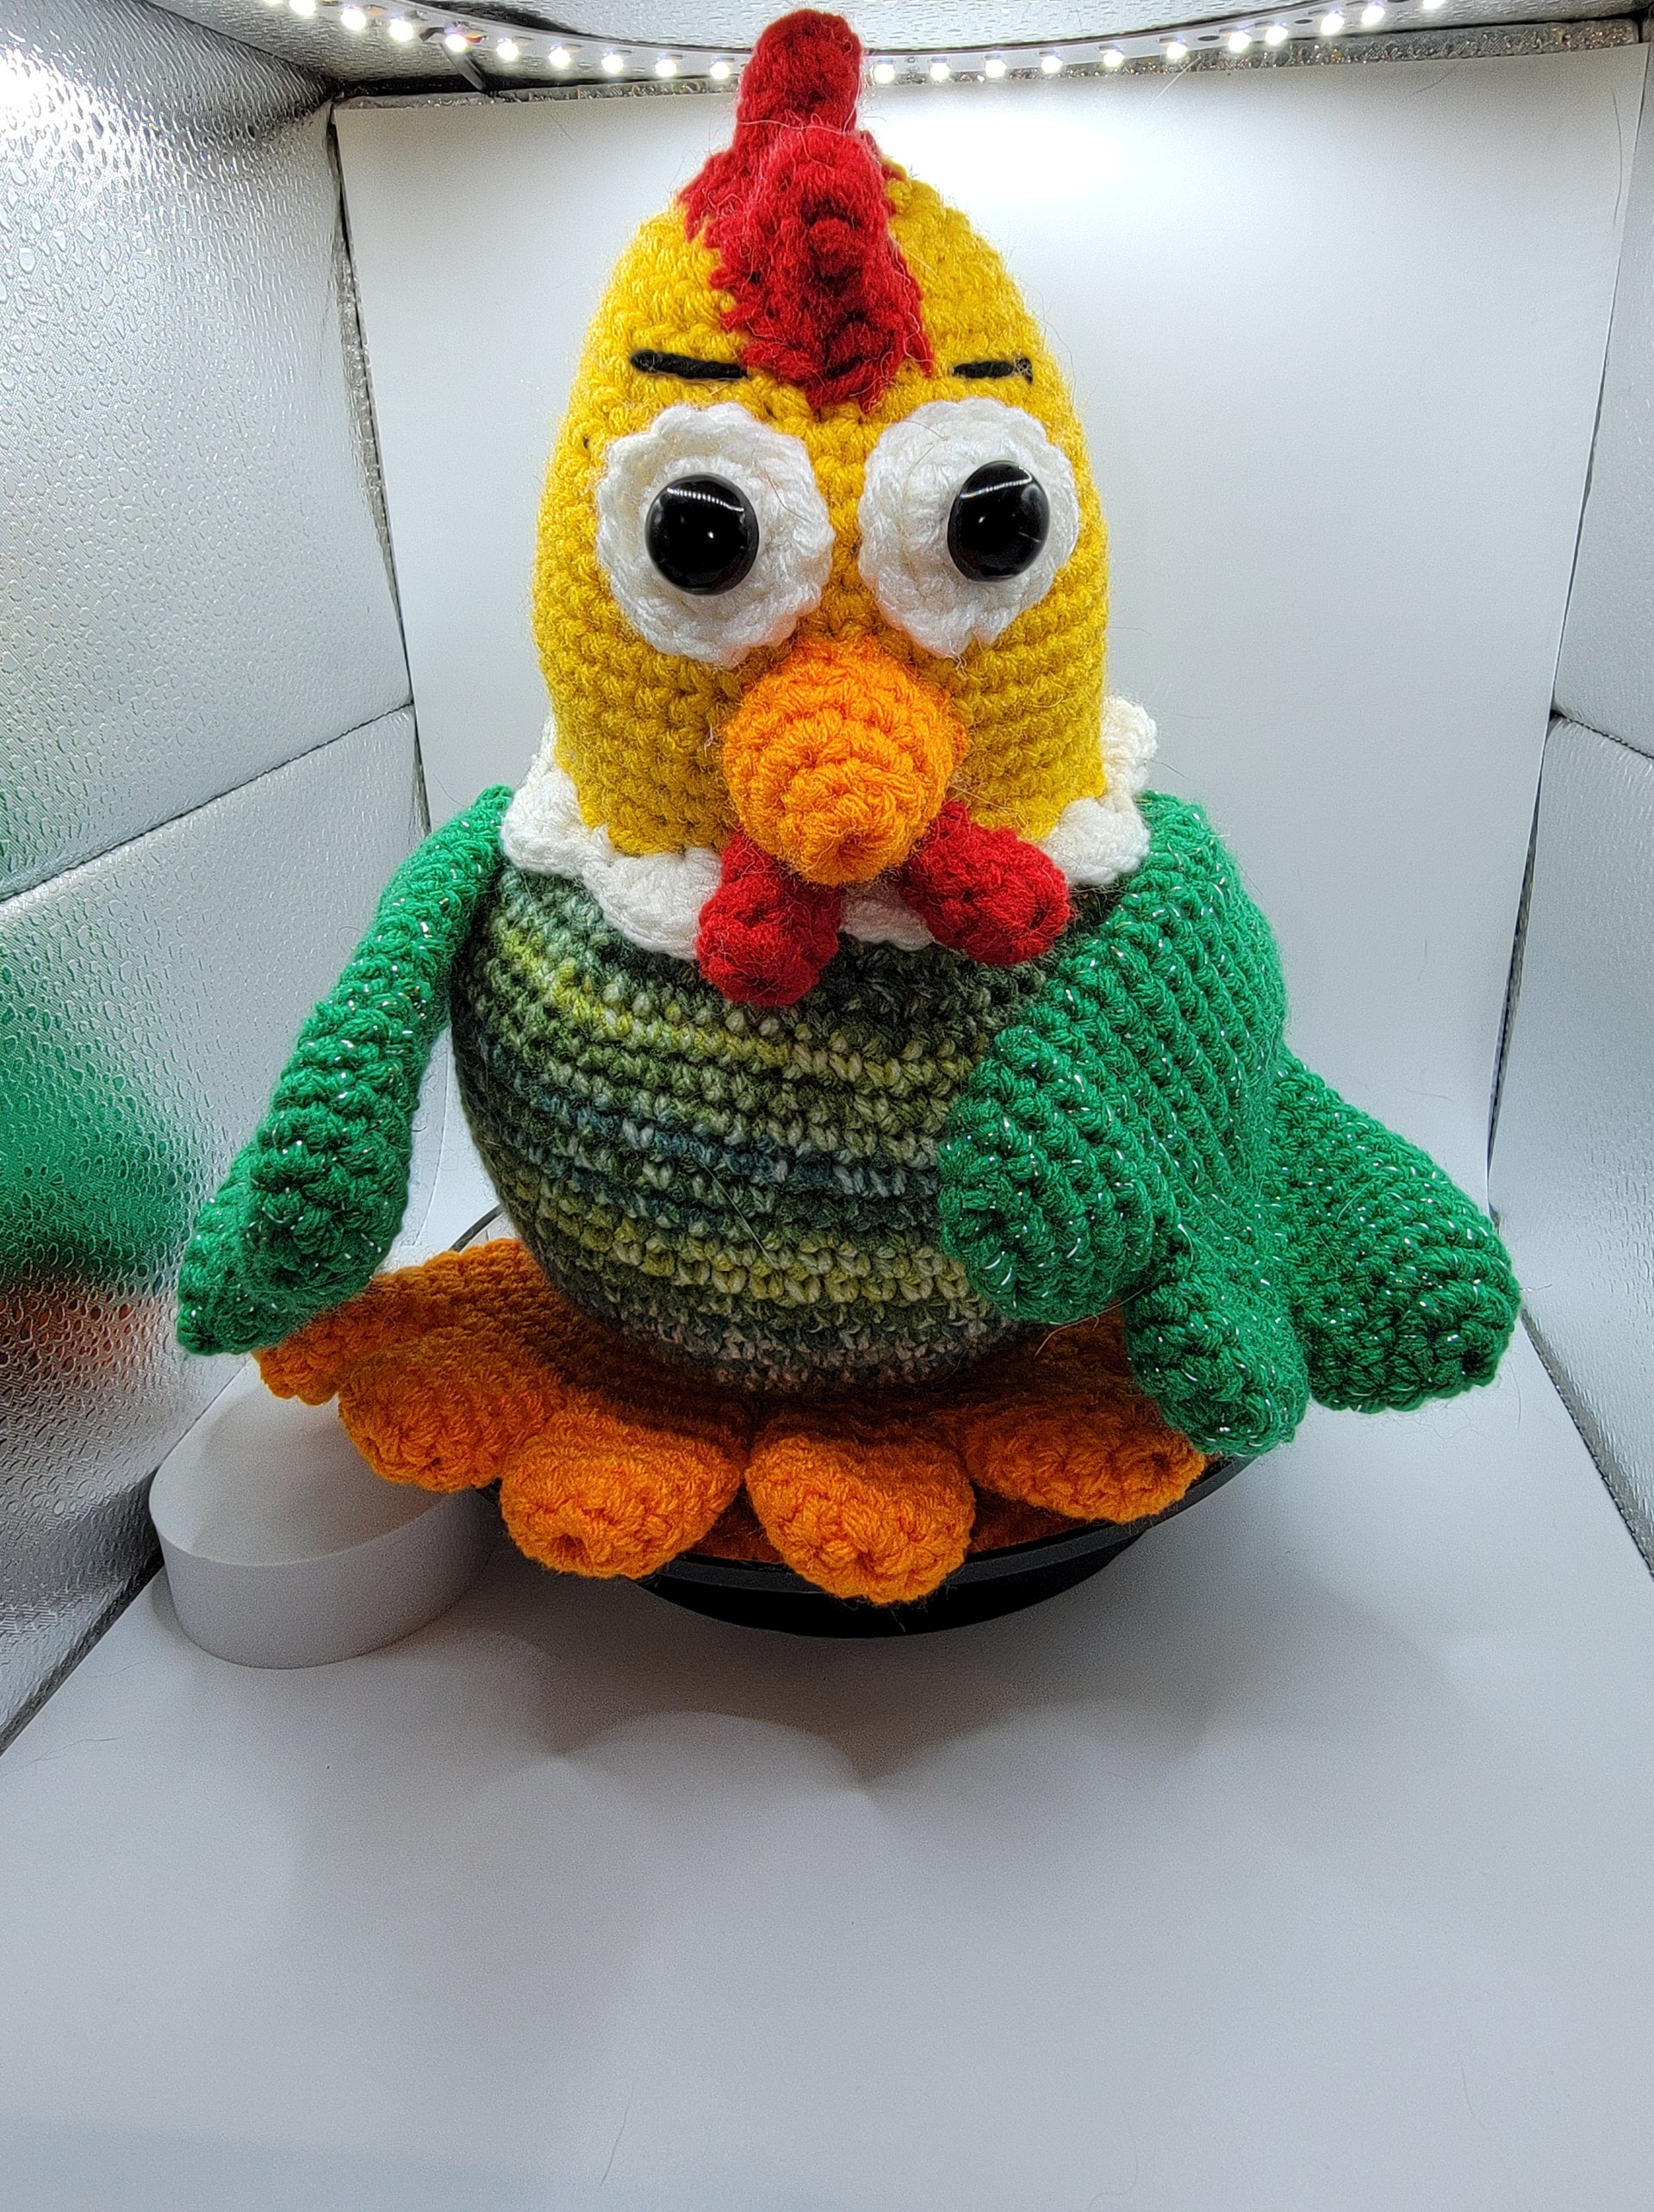 Crochet Items/Toys